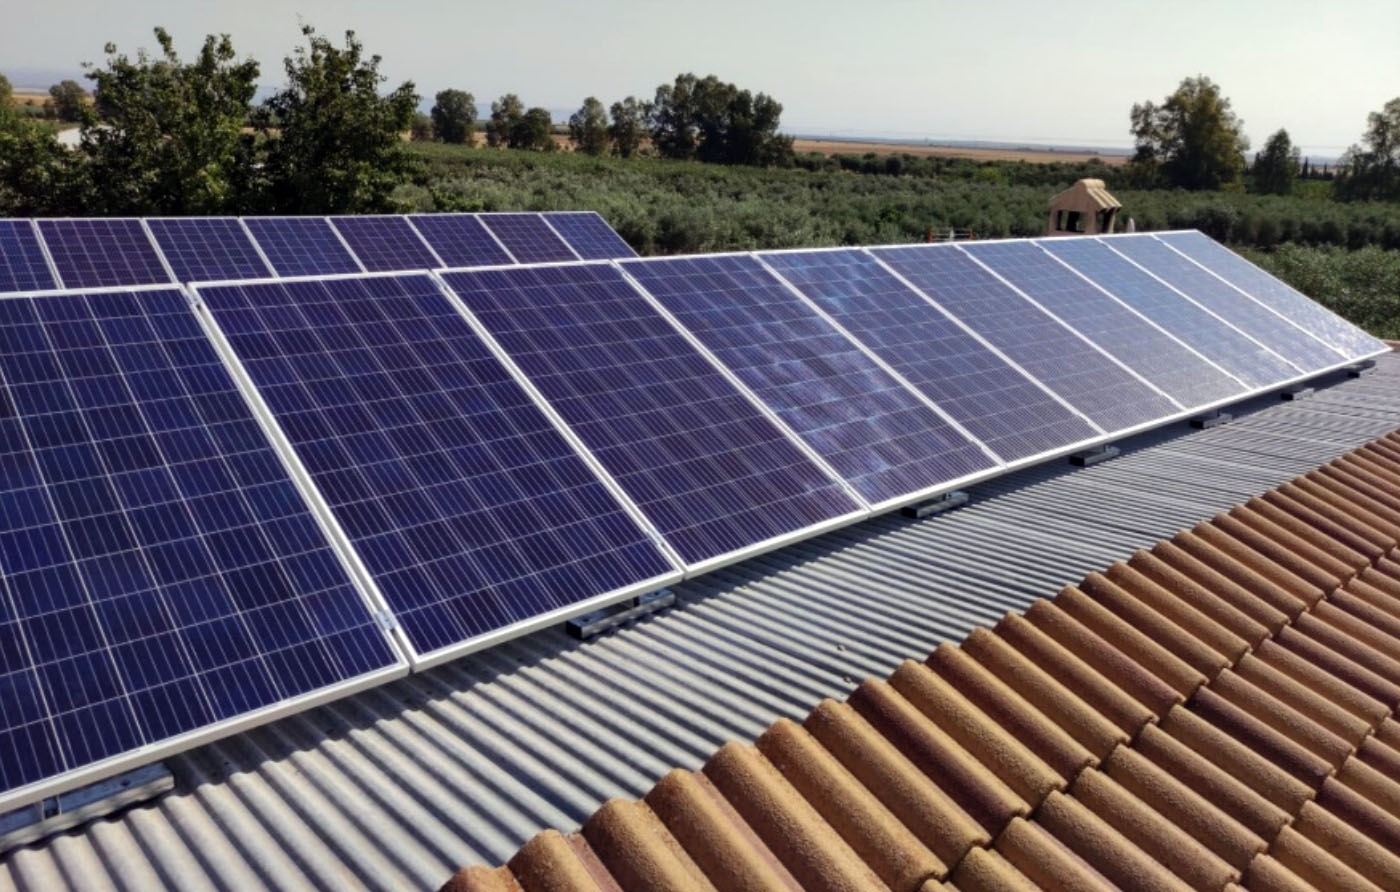 Instalacin fotovoltaica para autoconsumo residencial de 6 kWp en Crdoba, realizada por Automatismos ITEA